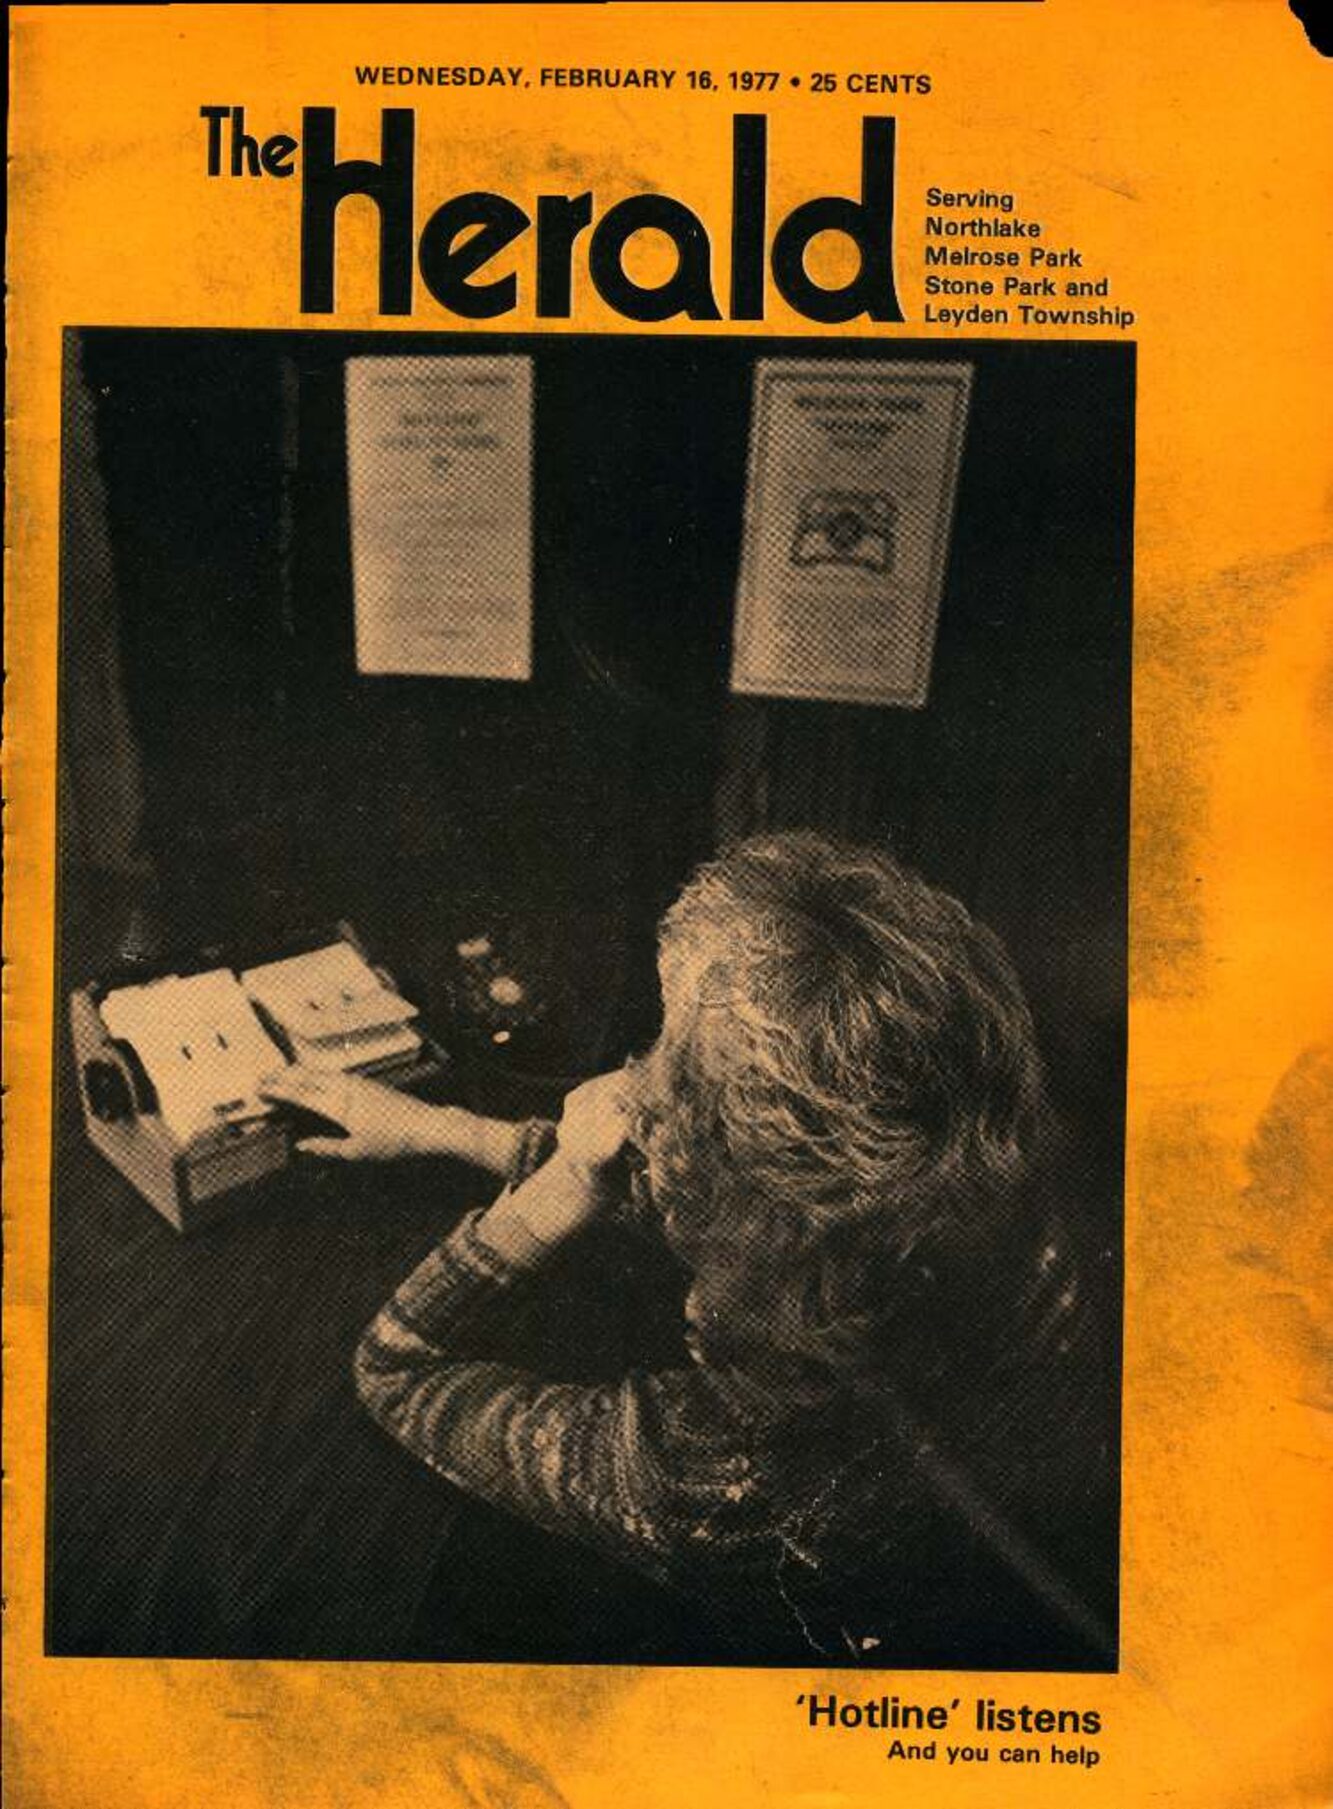 The Herald – 19770216